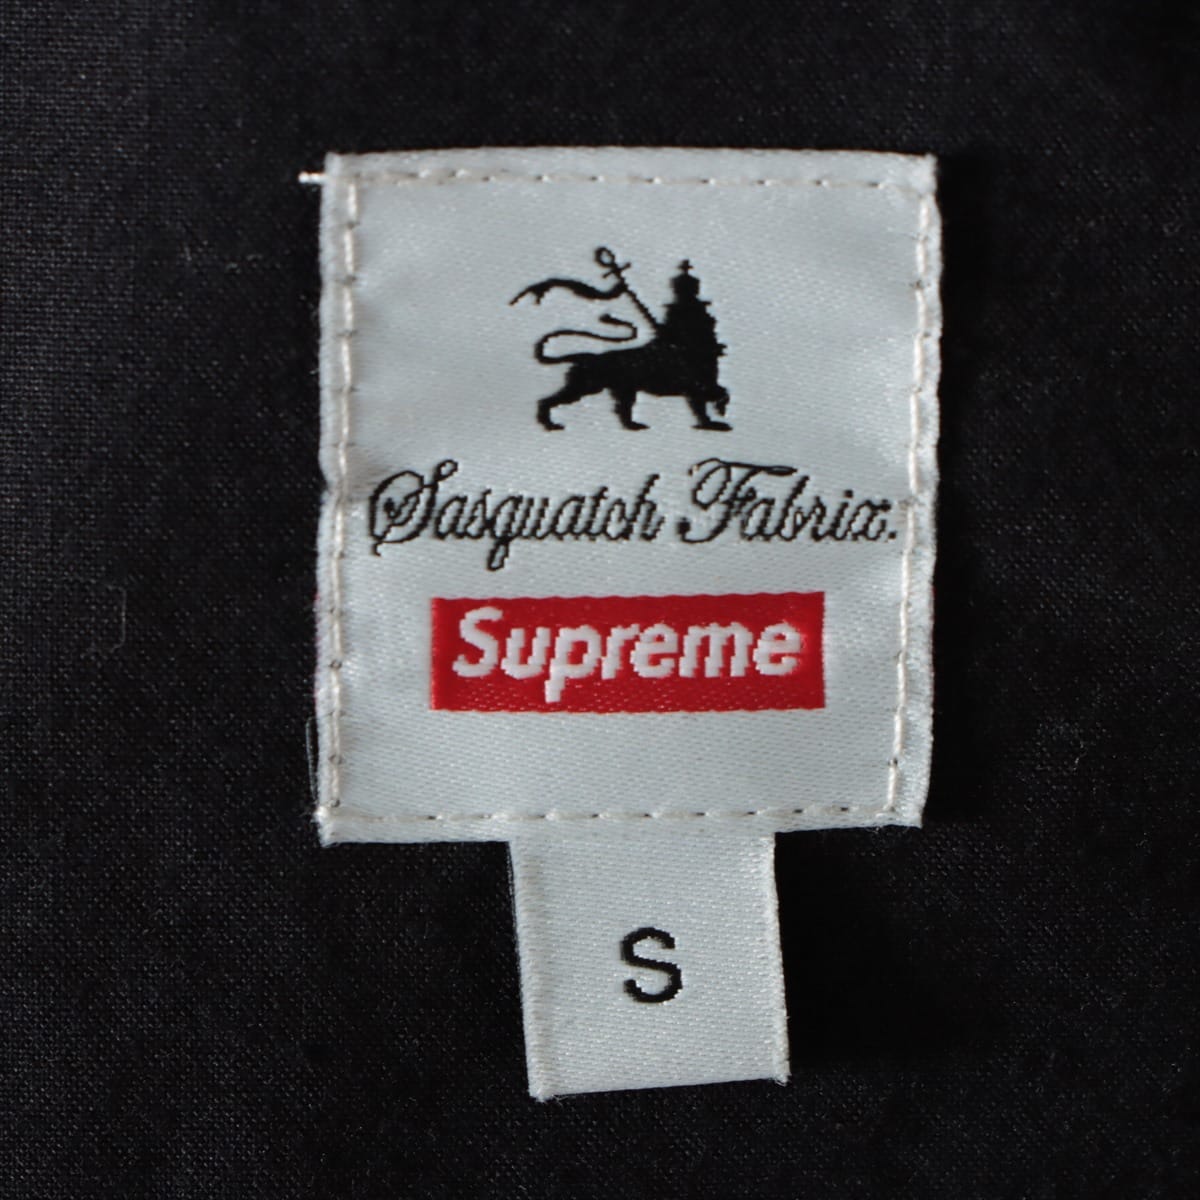 Supreme x Sasquatch Fabrics 16SS Cotton coats S Men's Black